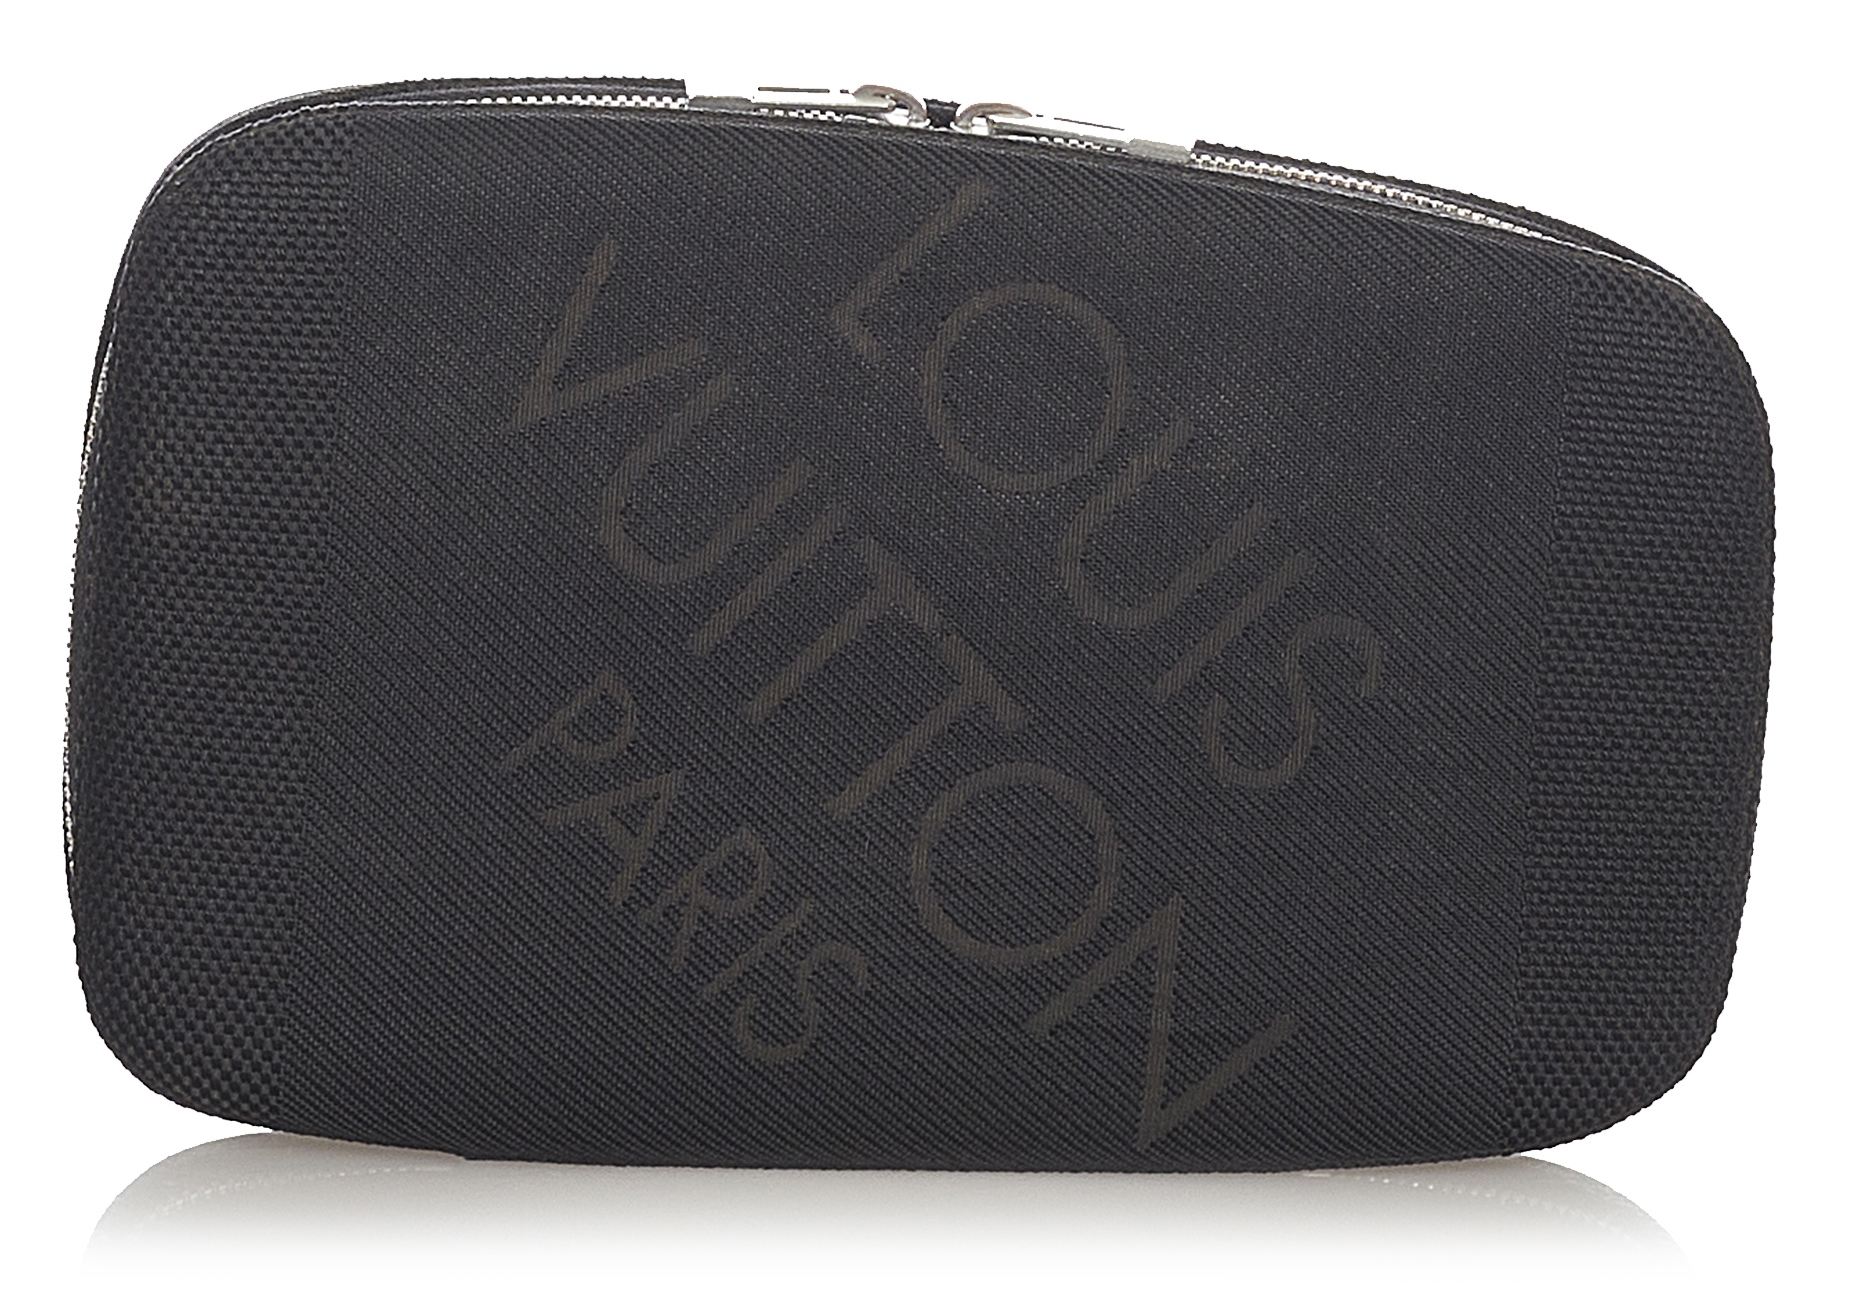 Vintage Louis Vuitton Dop Kit Rare Men's Toiletries Bag 